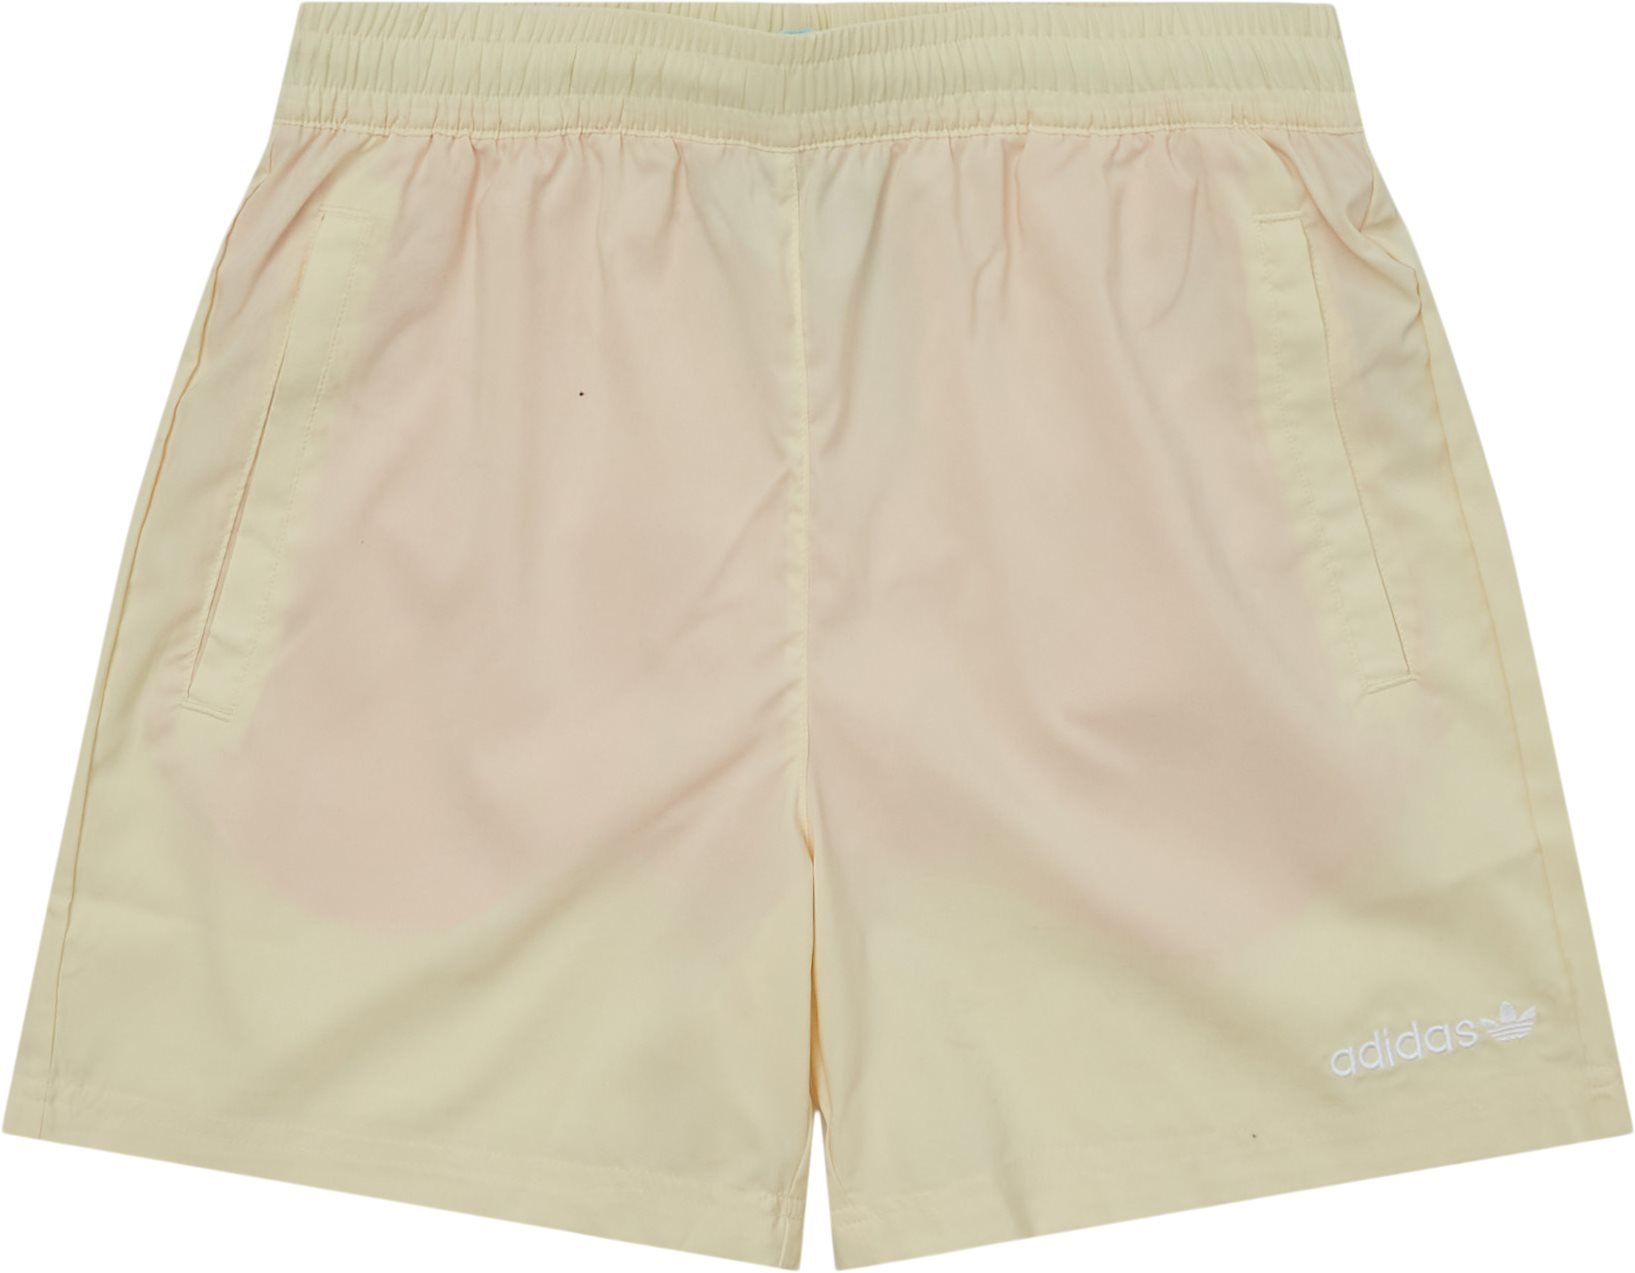 Swimshort - Shorts - Regular fit - Yellow